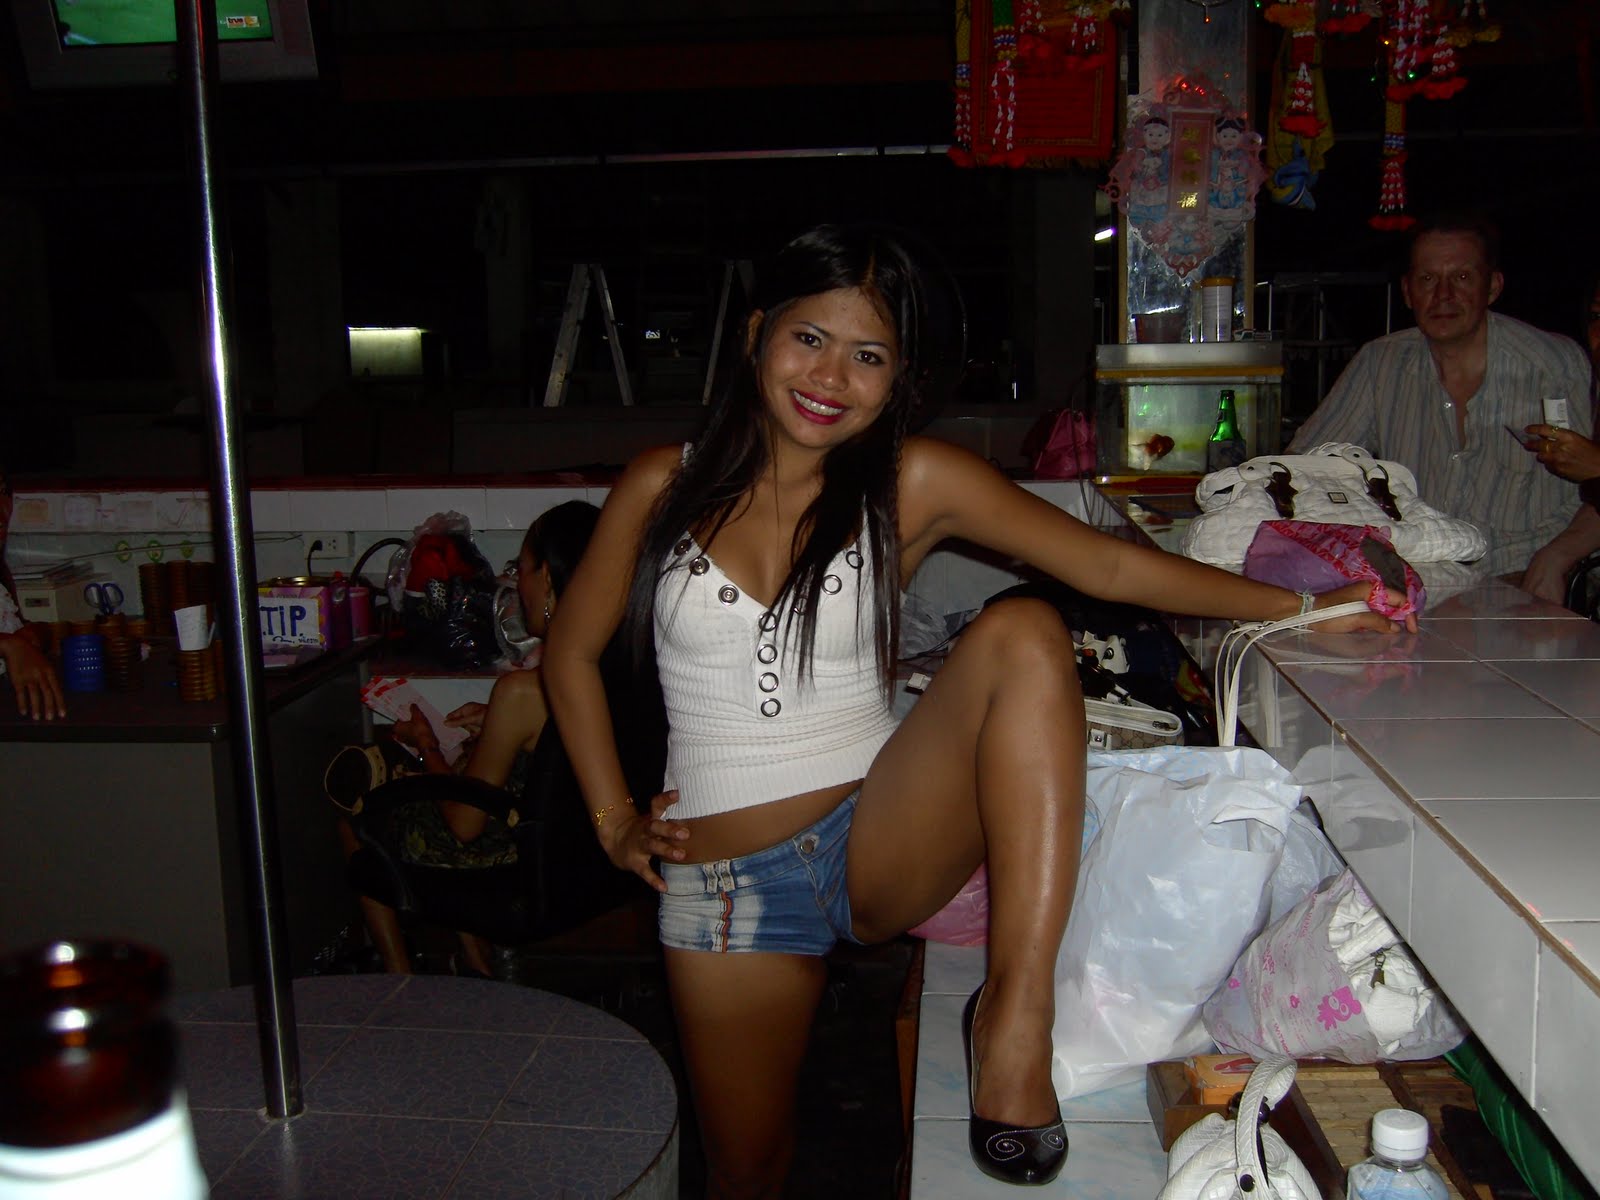  Buy Prostitutes in Pattaya (TH)